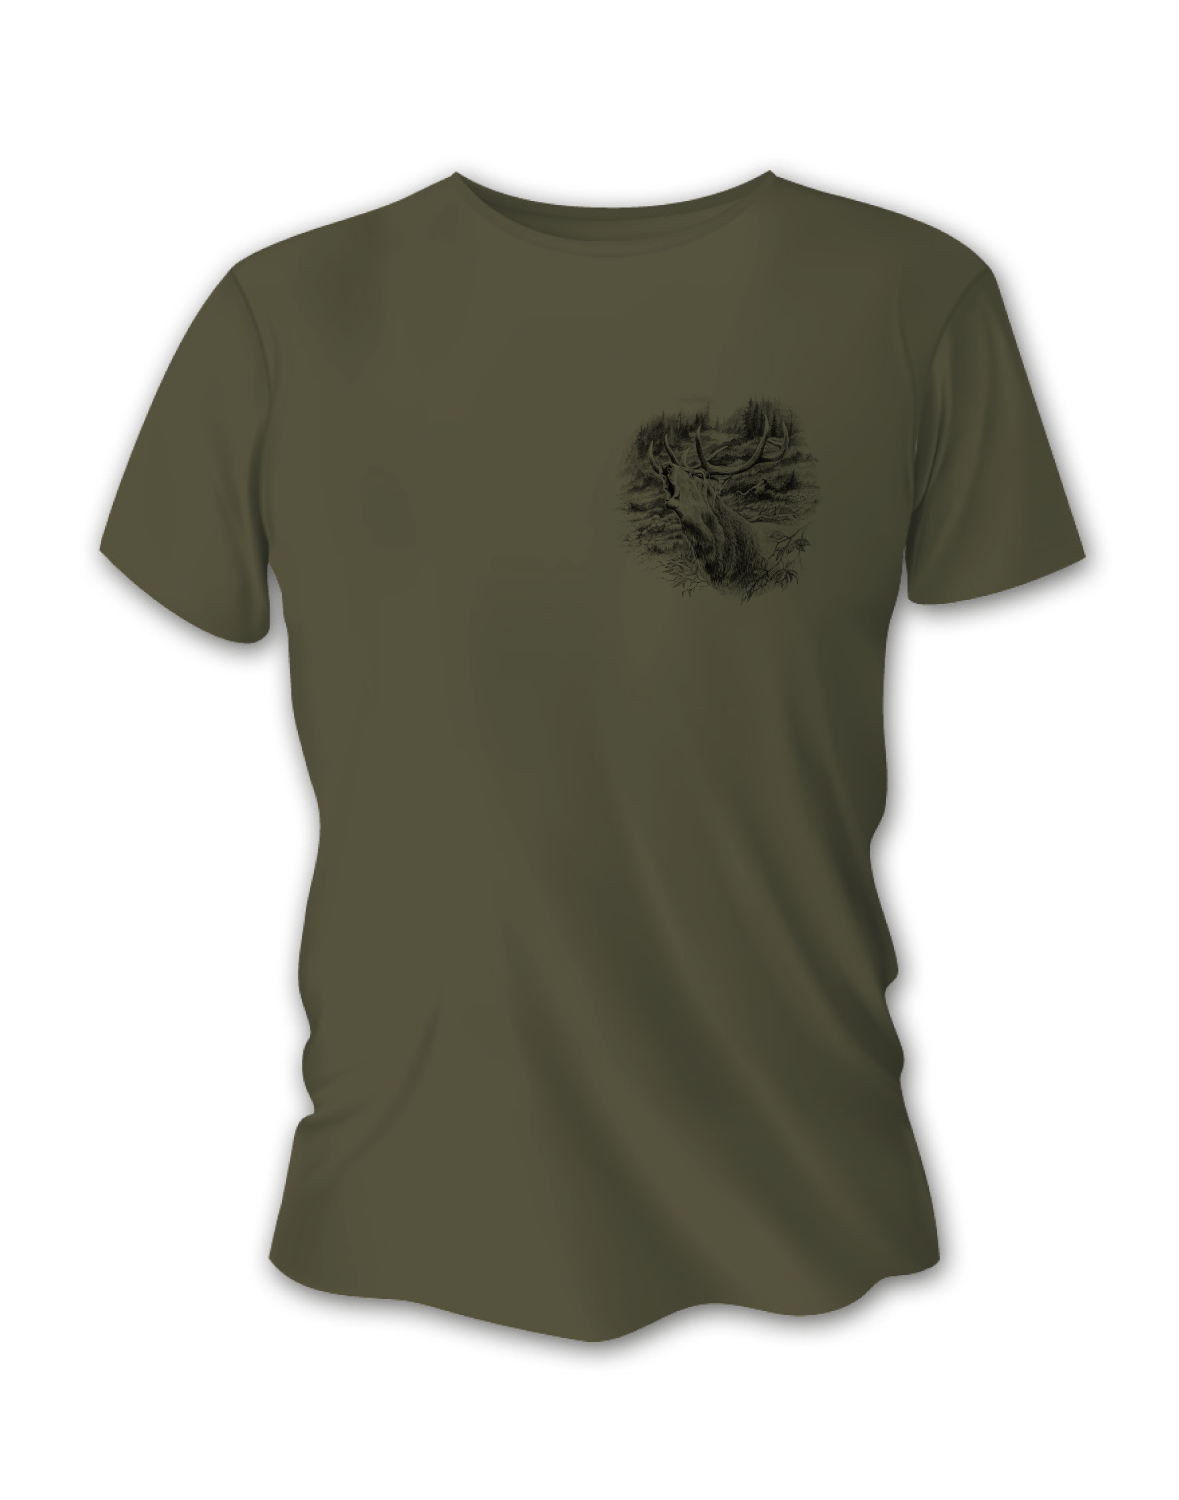 Pánske poľovnícke tričko TETRAO jeleň malý - zelené   M